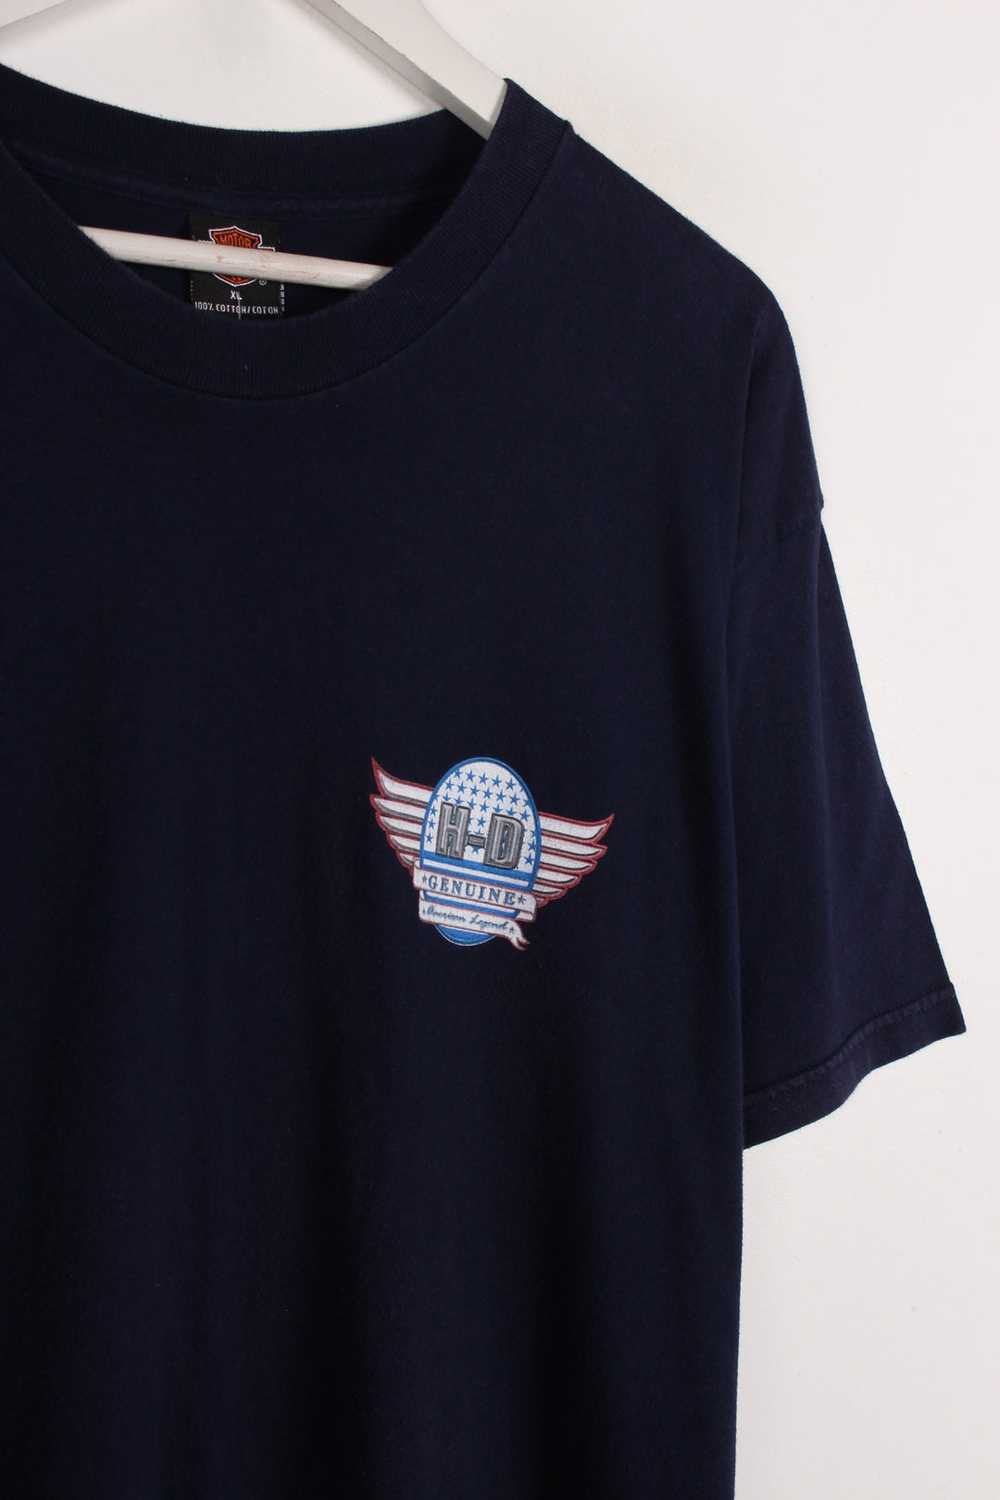 90's Harley Davidson T-Shirt Navy XL - image 3